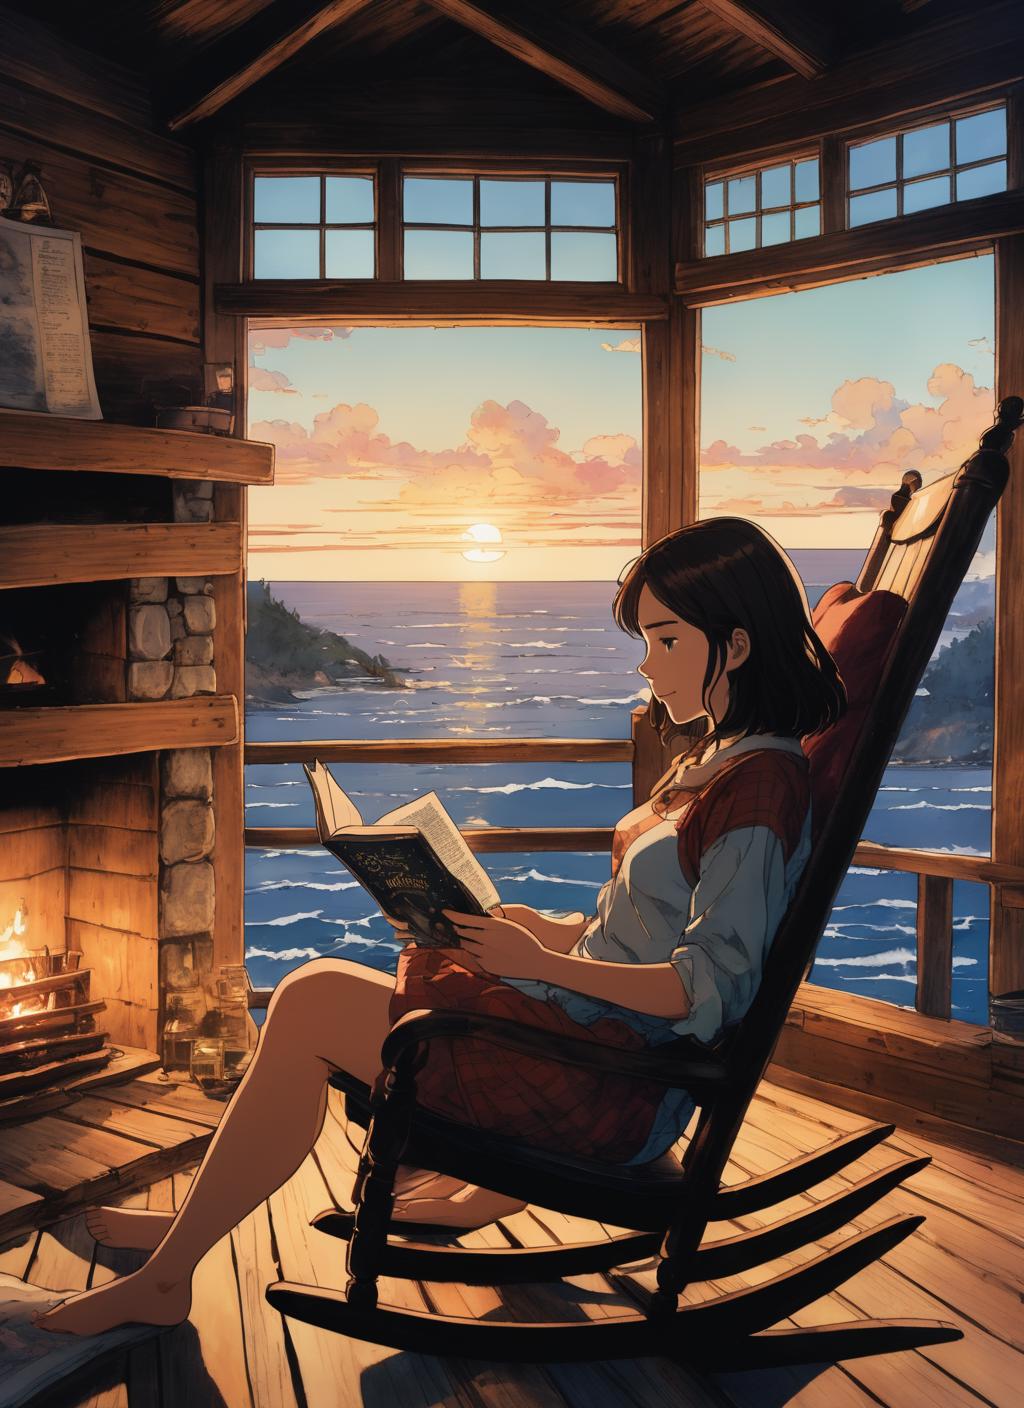 Loli Anime Girl Reading Book Live Wallpaper - MoeWalls